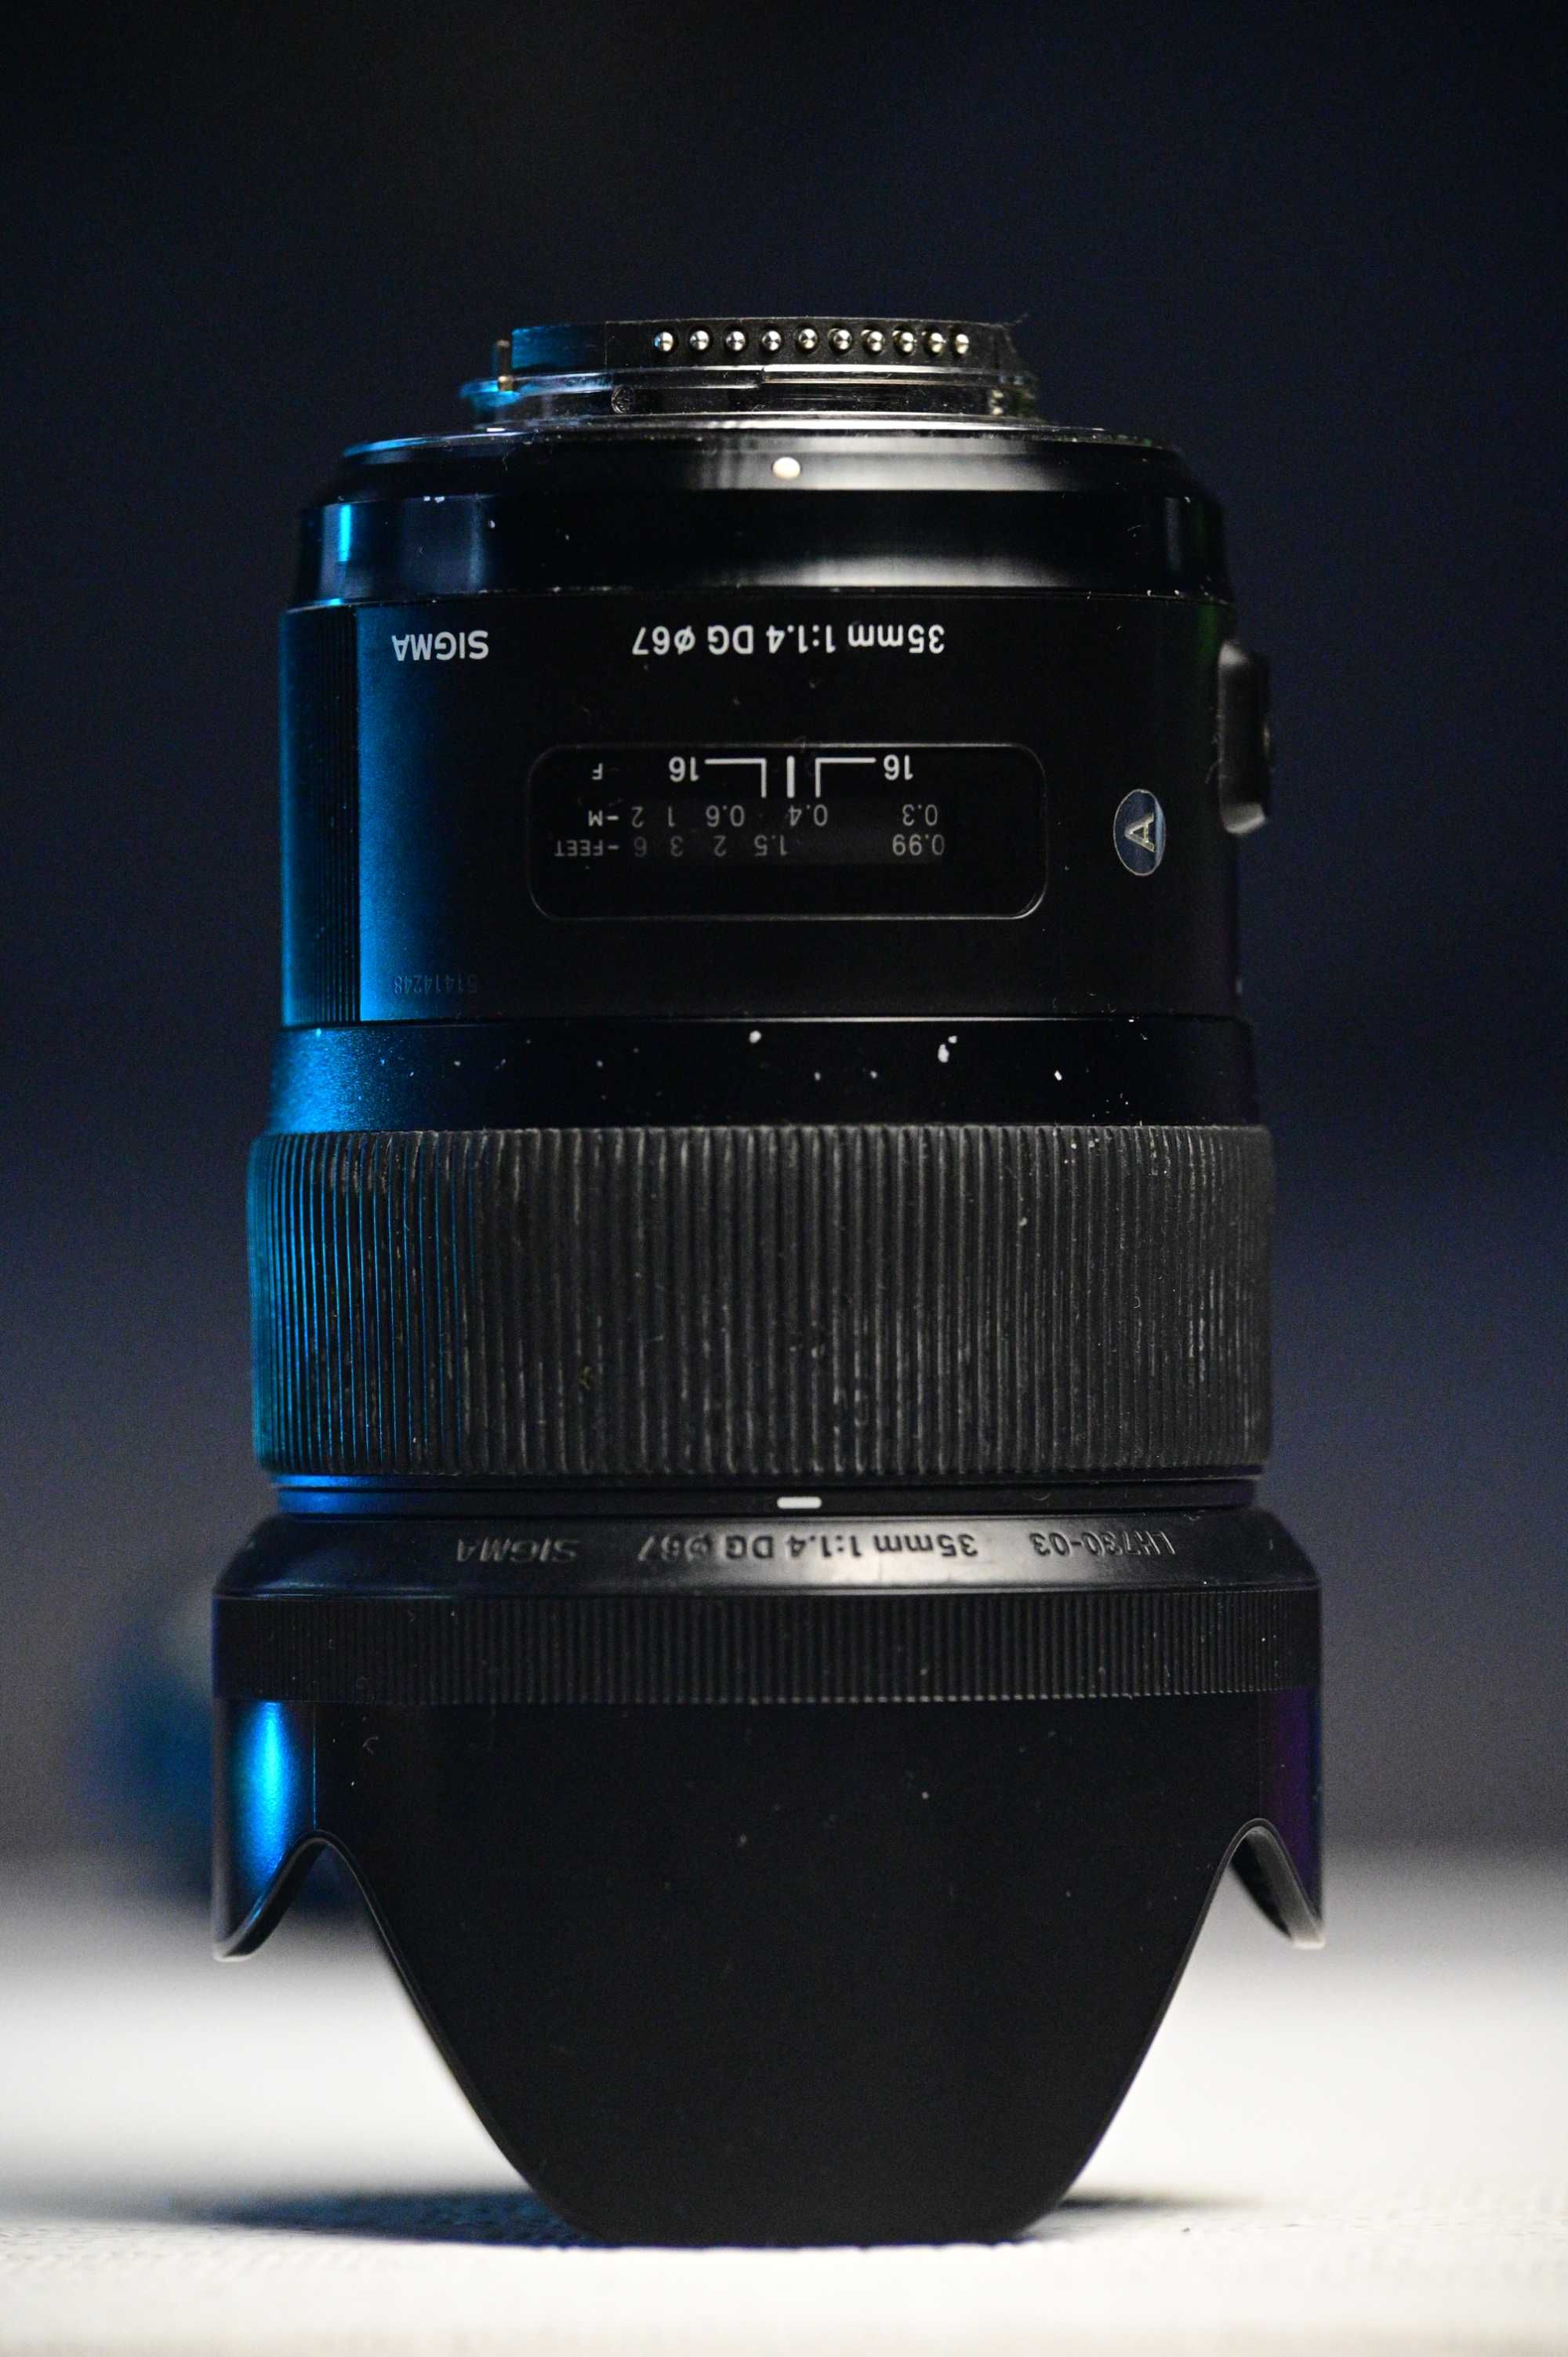 Pachet Nikon D750 + Sigma 24-70 + Sigma 35 1.4
-